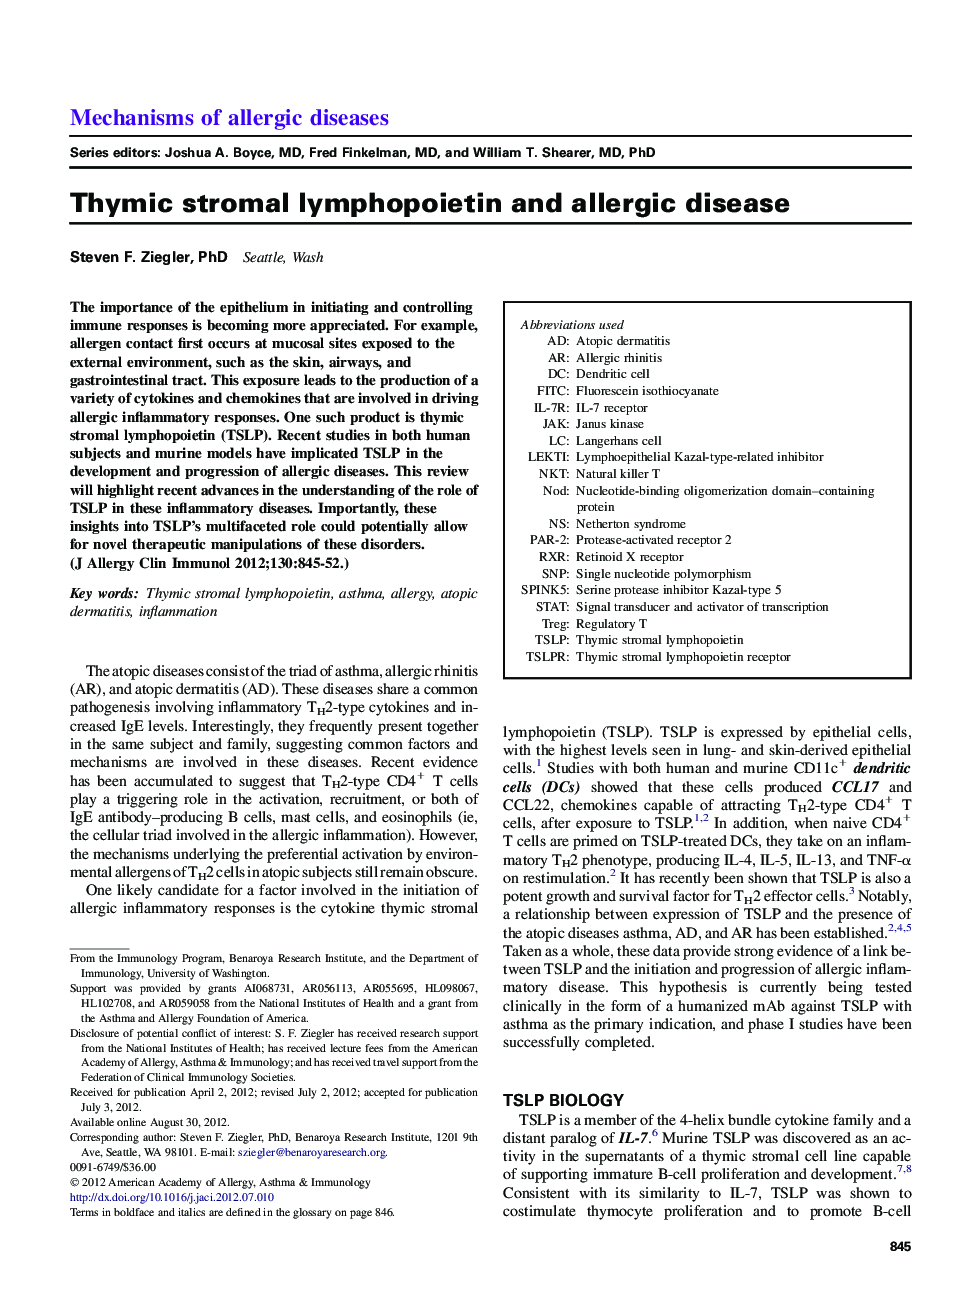 Thymic stromal lymphopoietin and allergic disease 